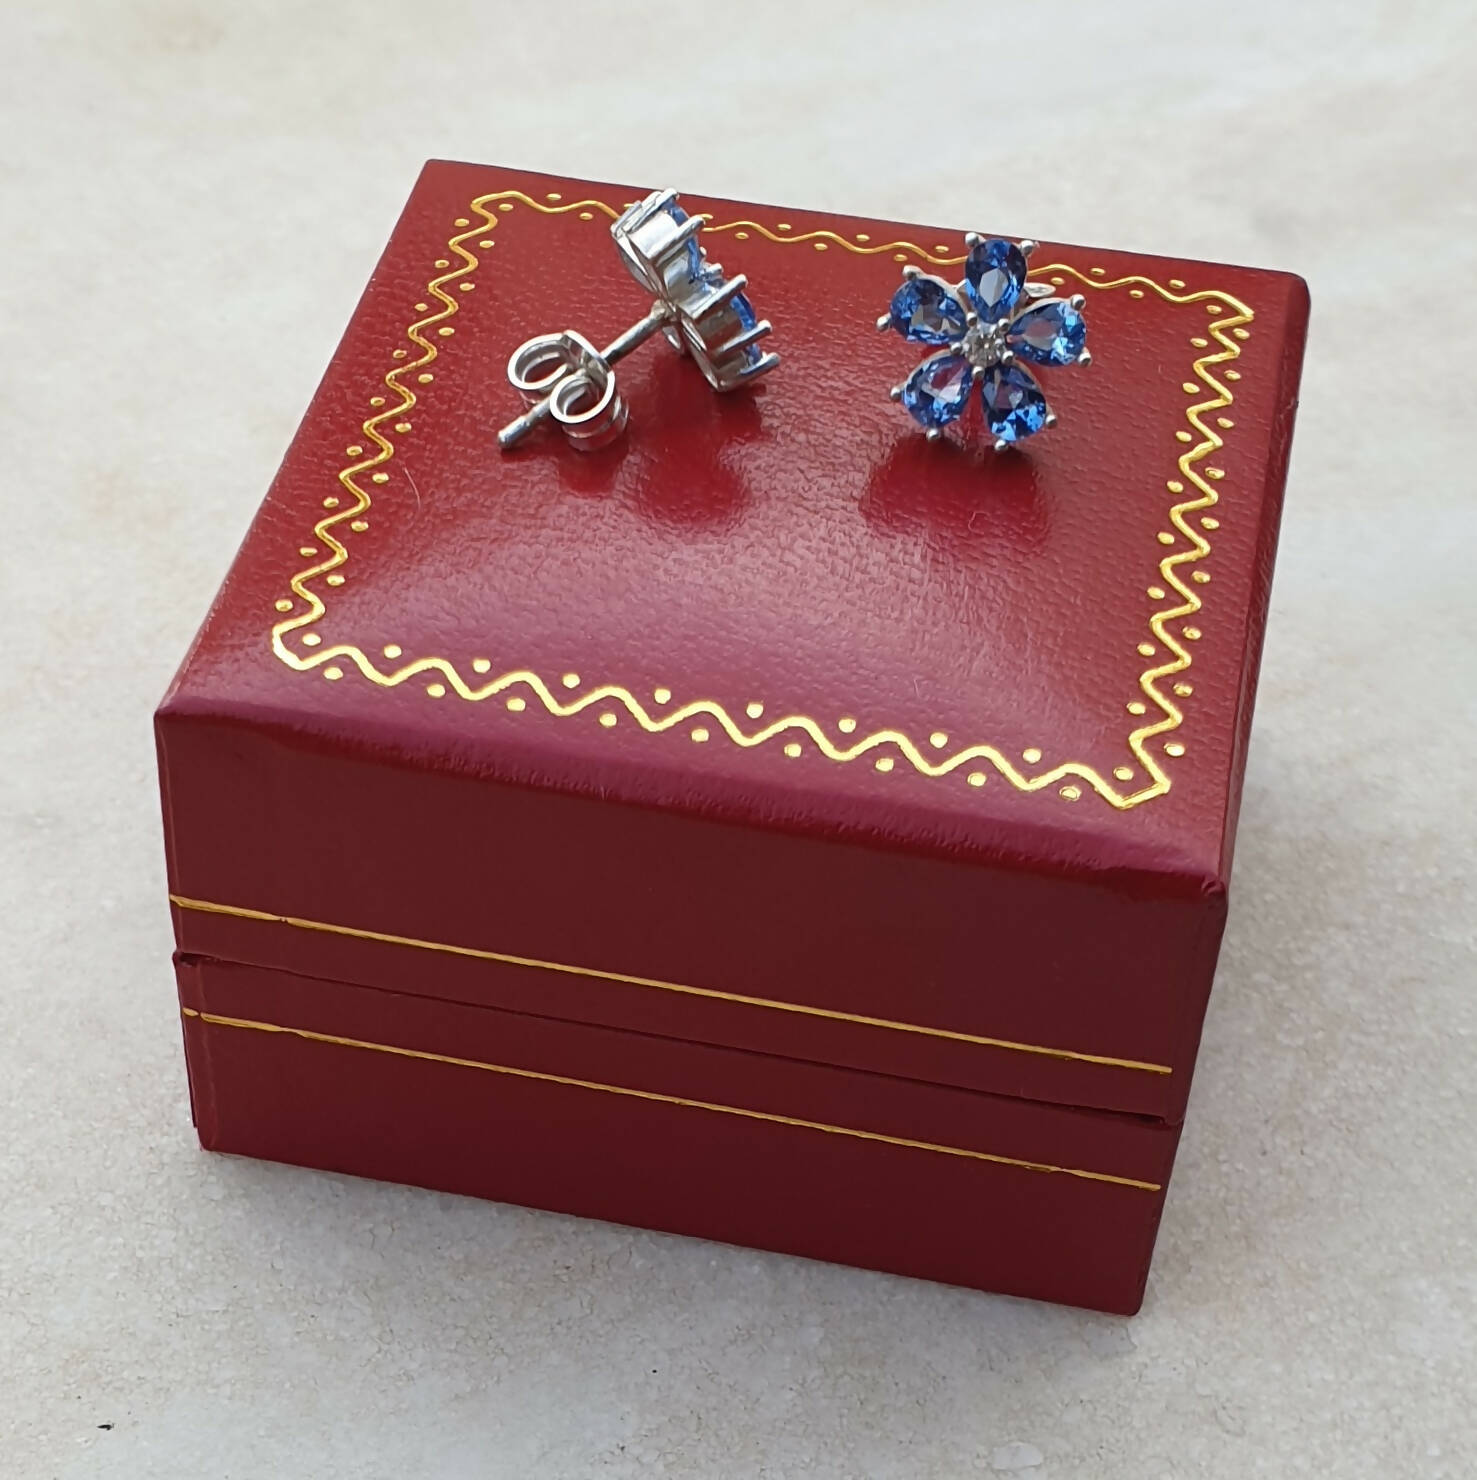 Masonic Earrings - 925 Silver Forget Me Not With Light Blue Semi precious Stones - Bricks Masons